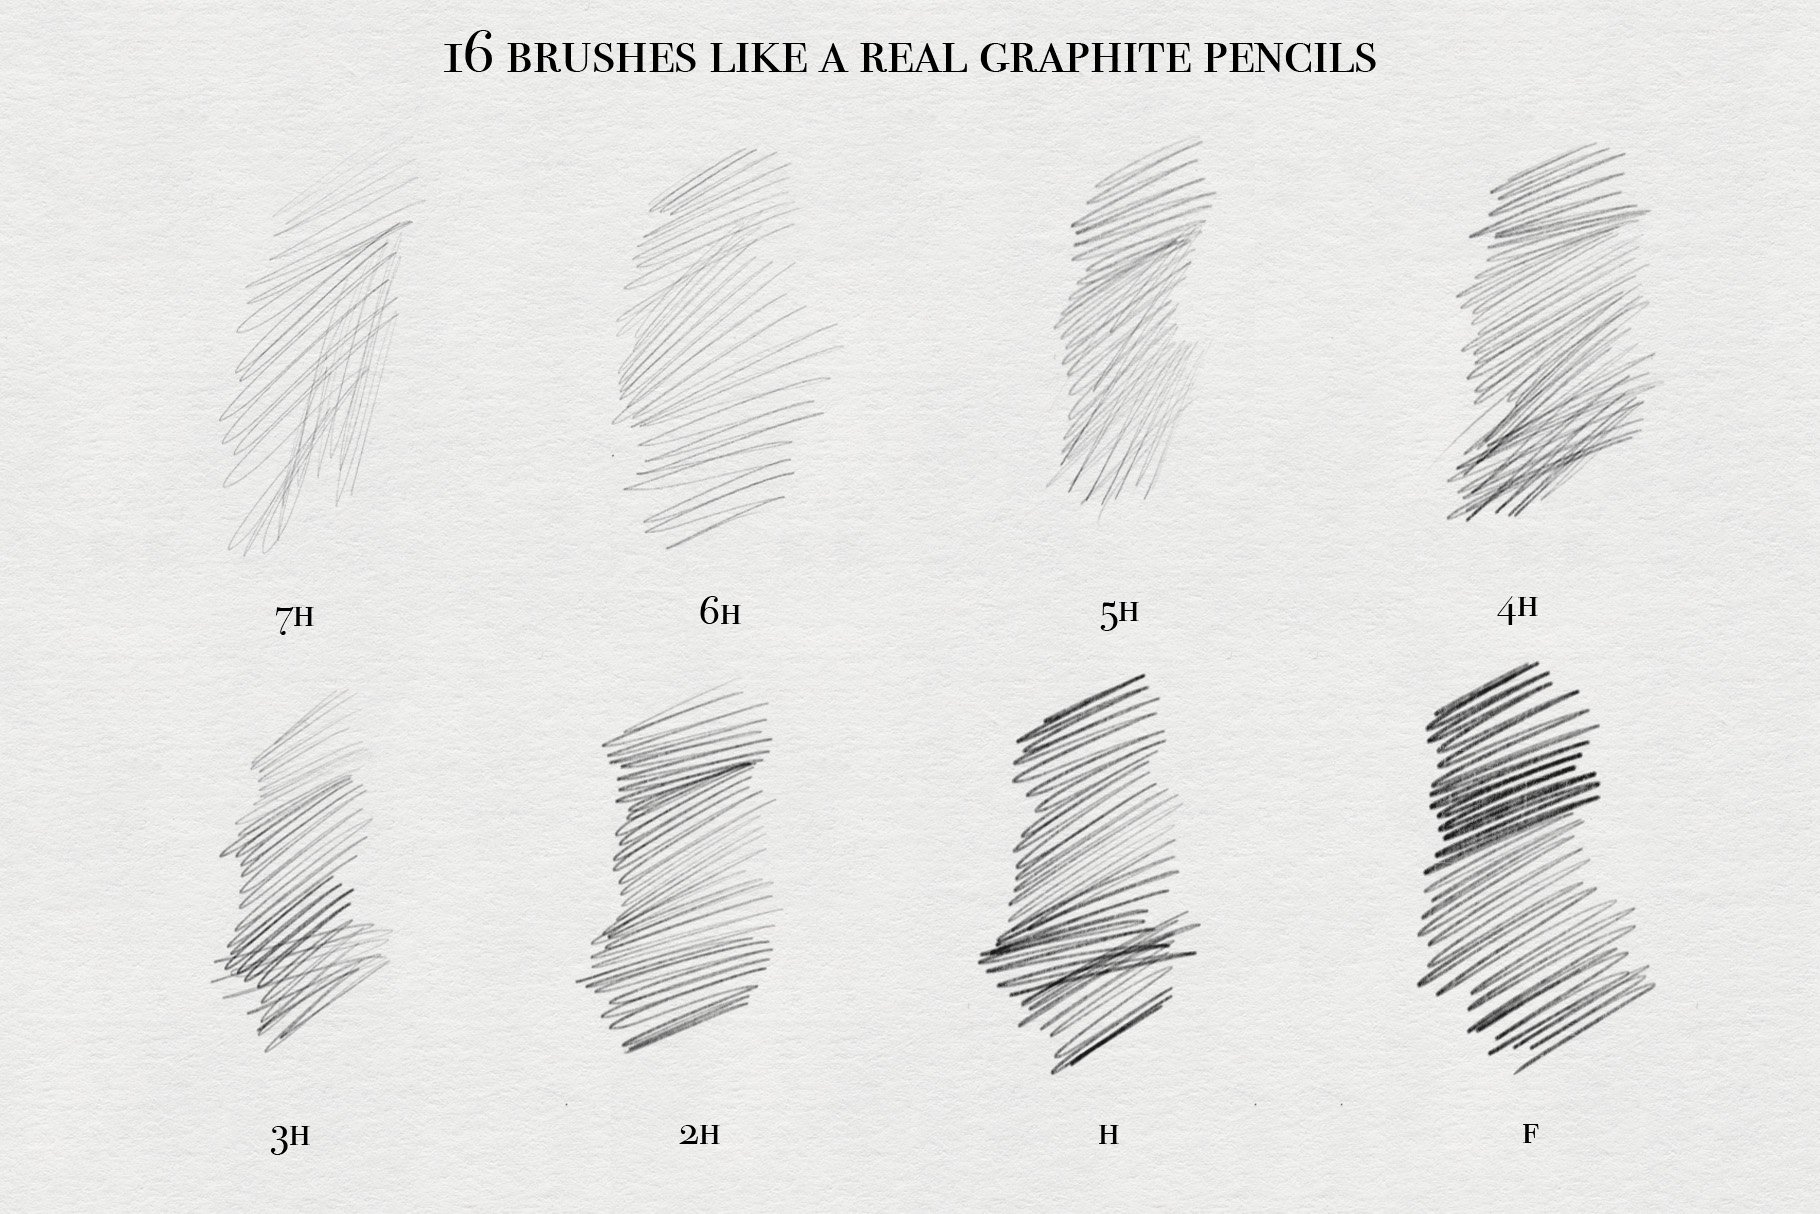 Graphite Pencils for Procreate preview image.